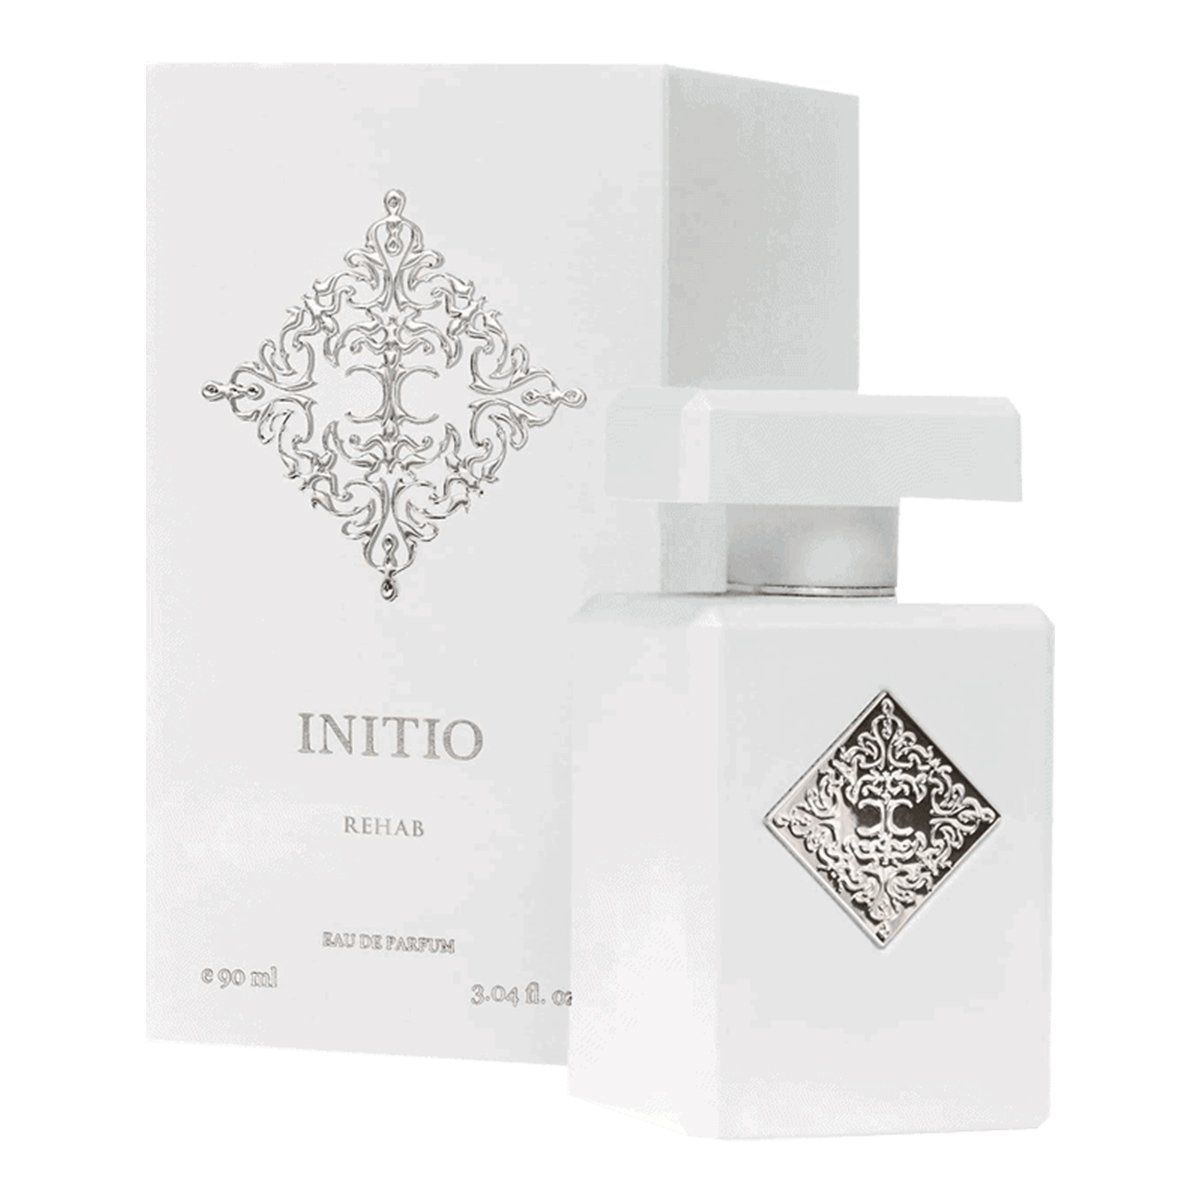  Initio Parfums Prives Rehab Extrait De Parfum 